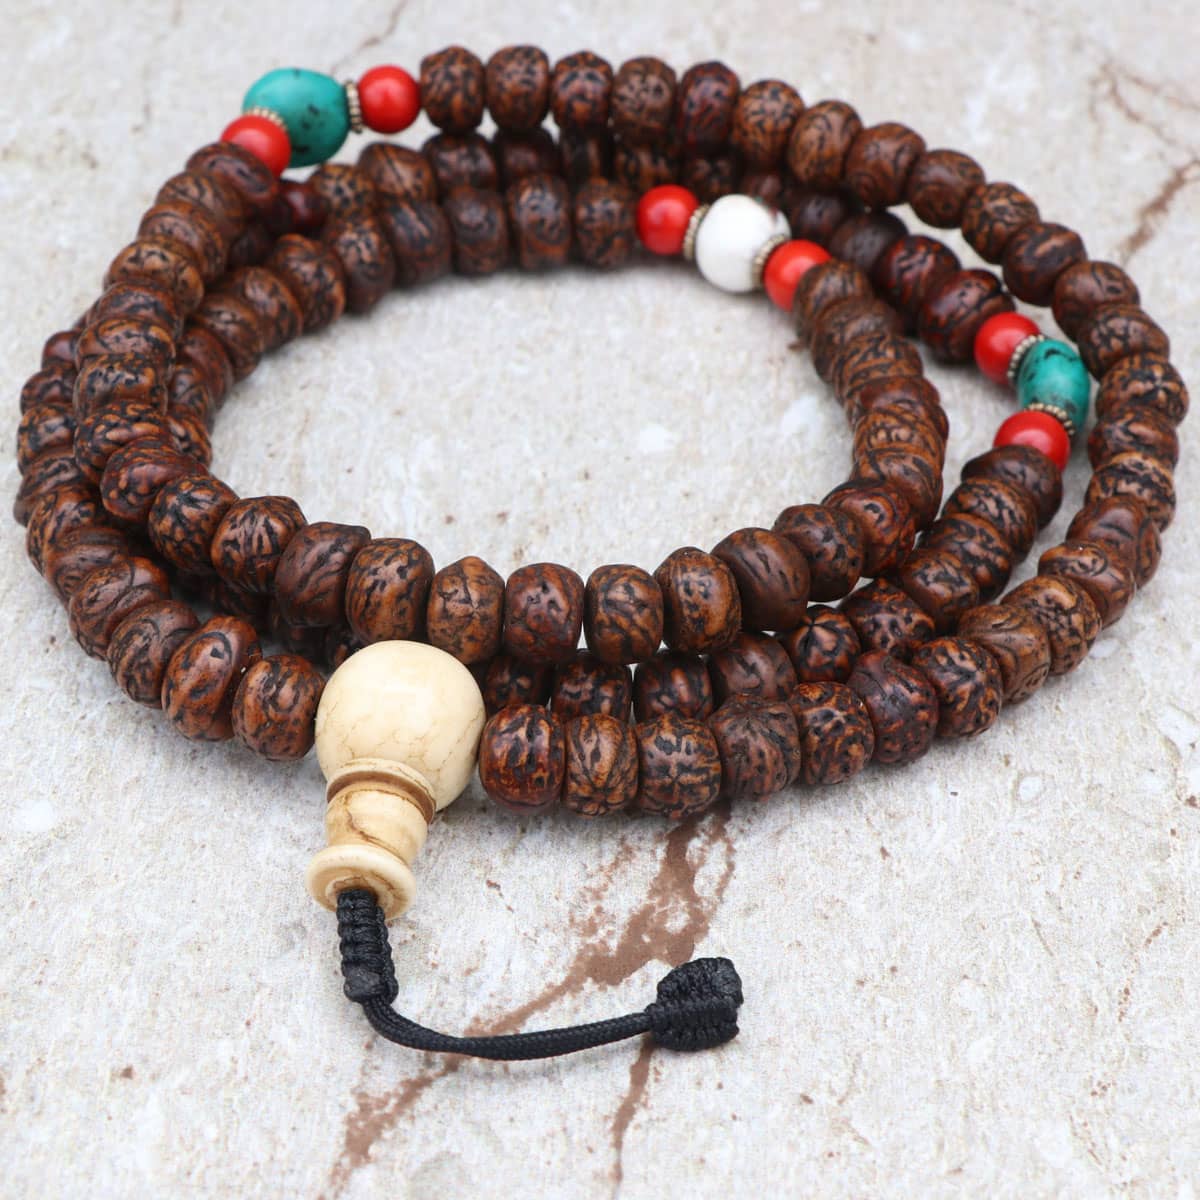 108 Prayer Beads Mala - Old Bodhi Seed Beads – Tibet/Nepal - Amazigh Ethnic  Jewelry